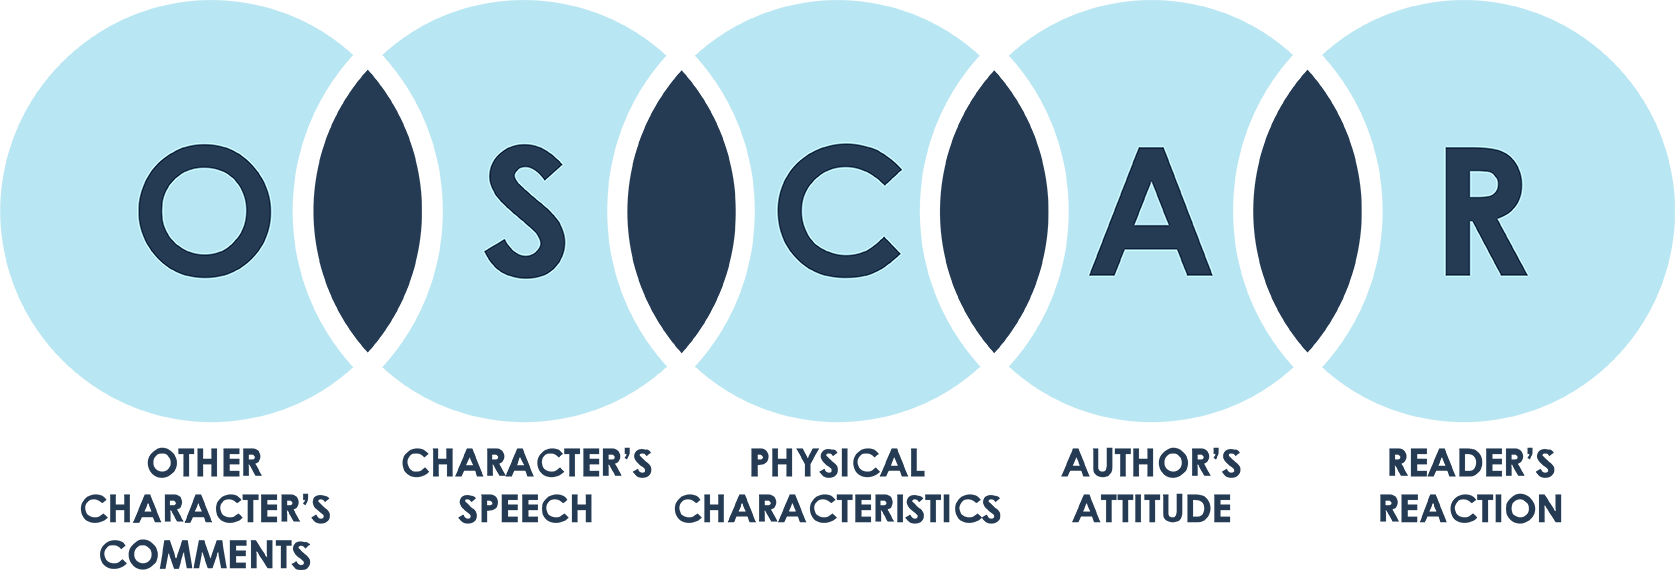 OSCAR Character Analysis